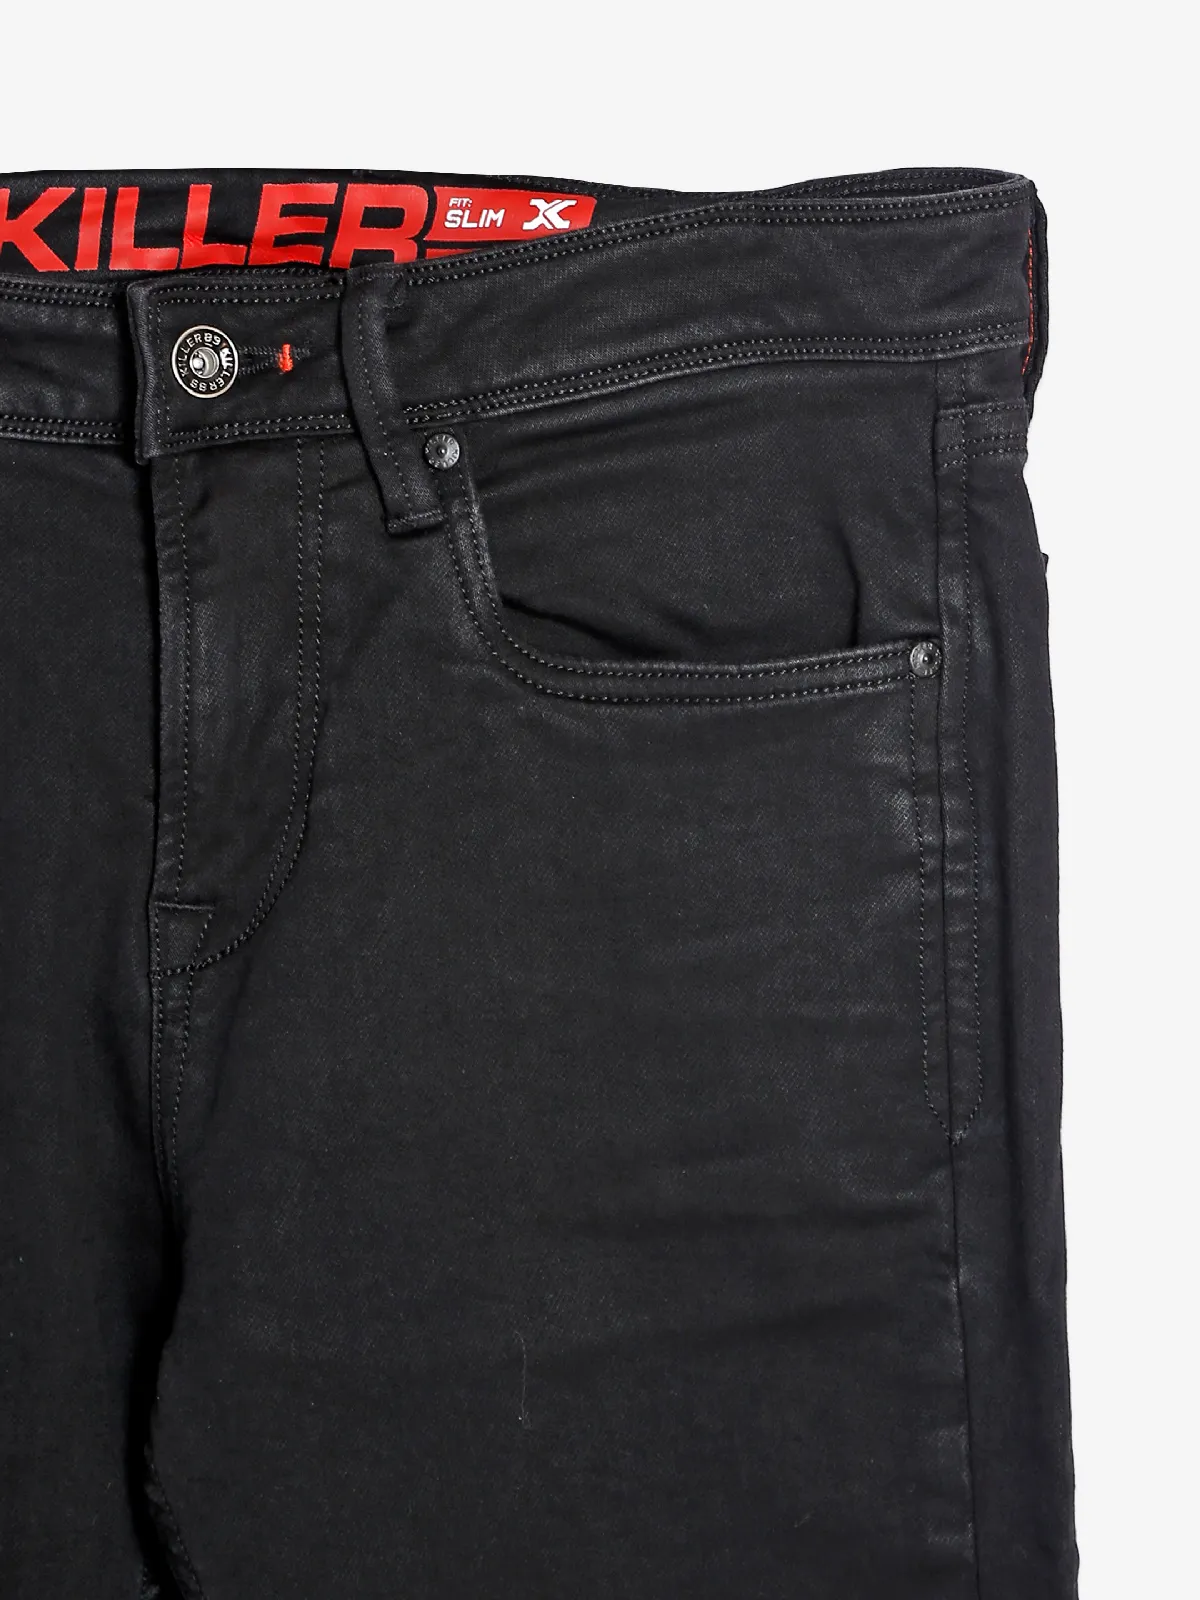 Killer black slim fit jeans